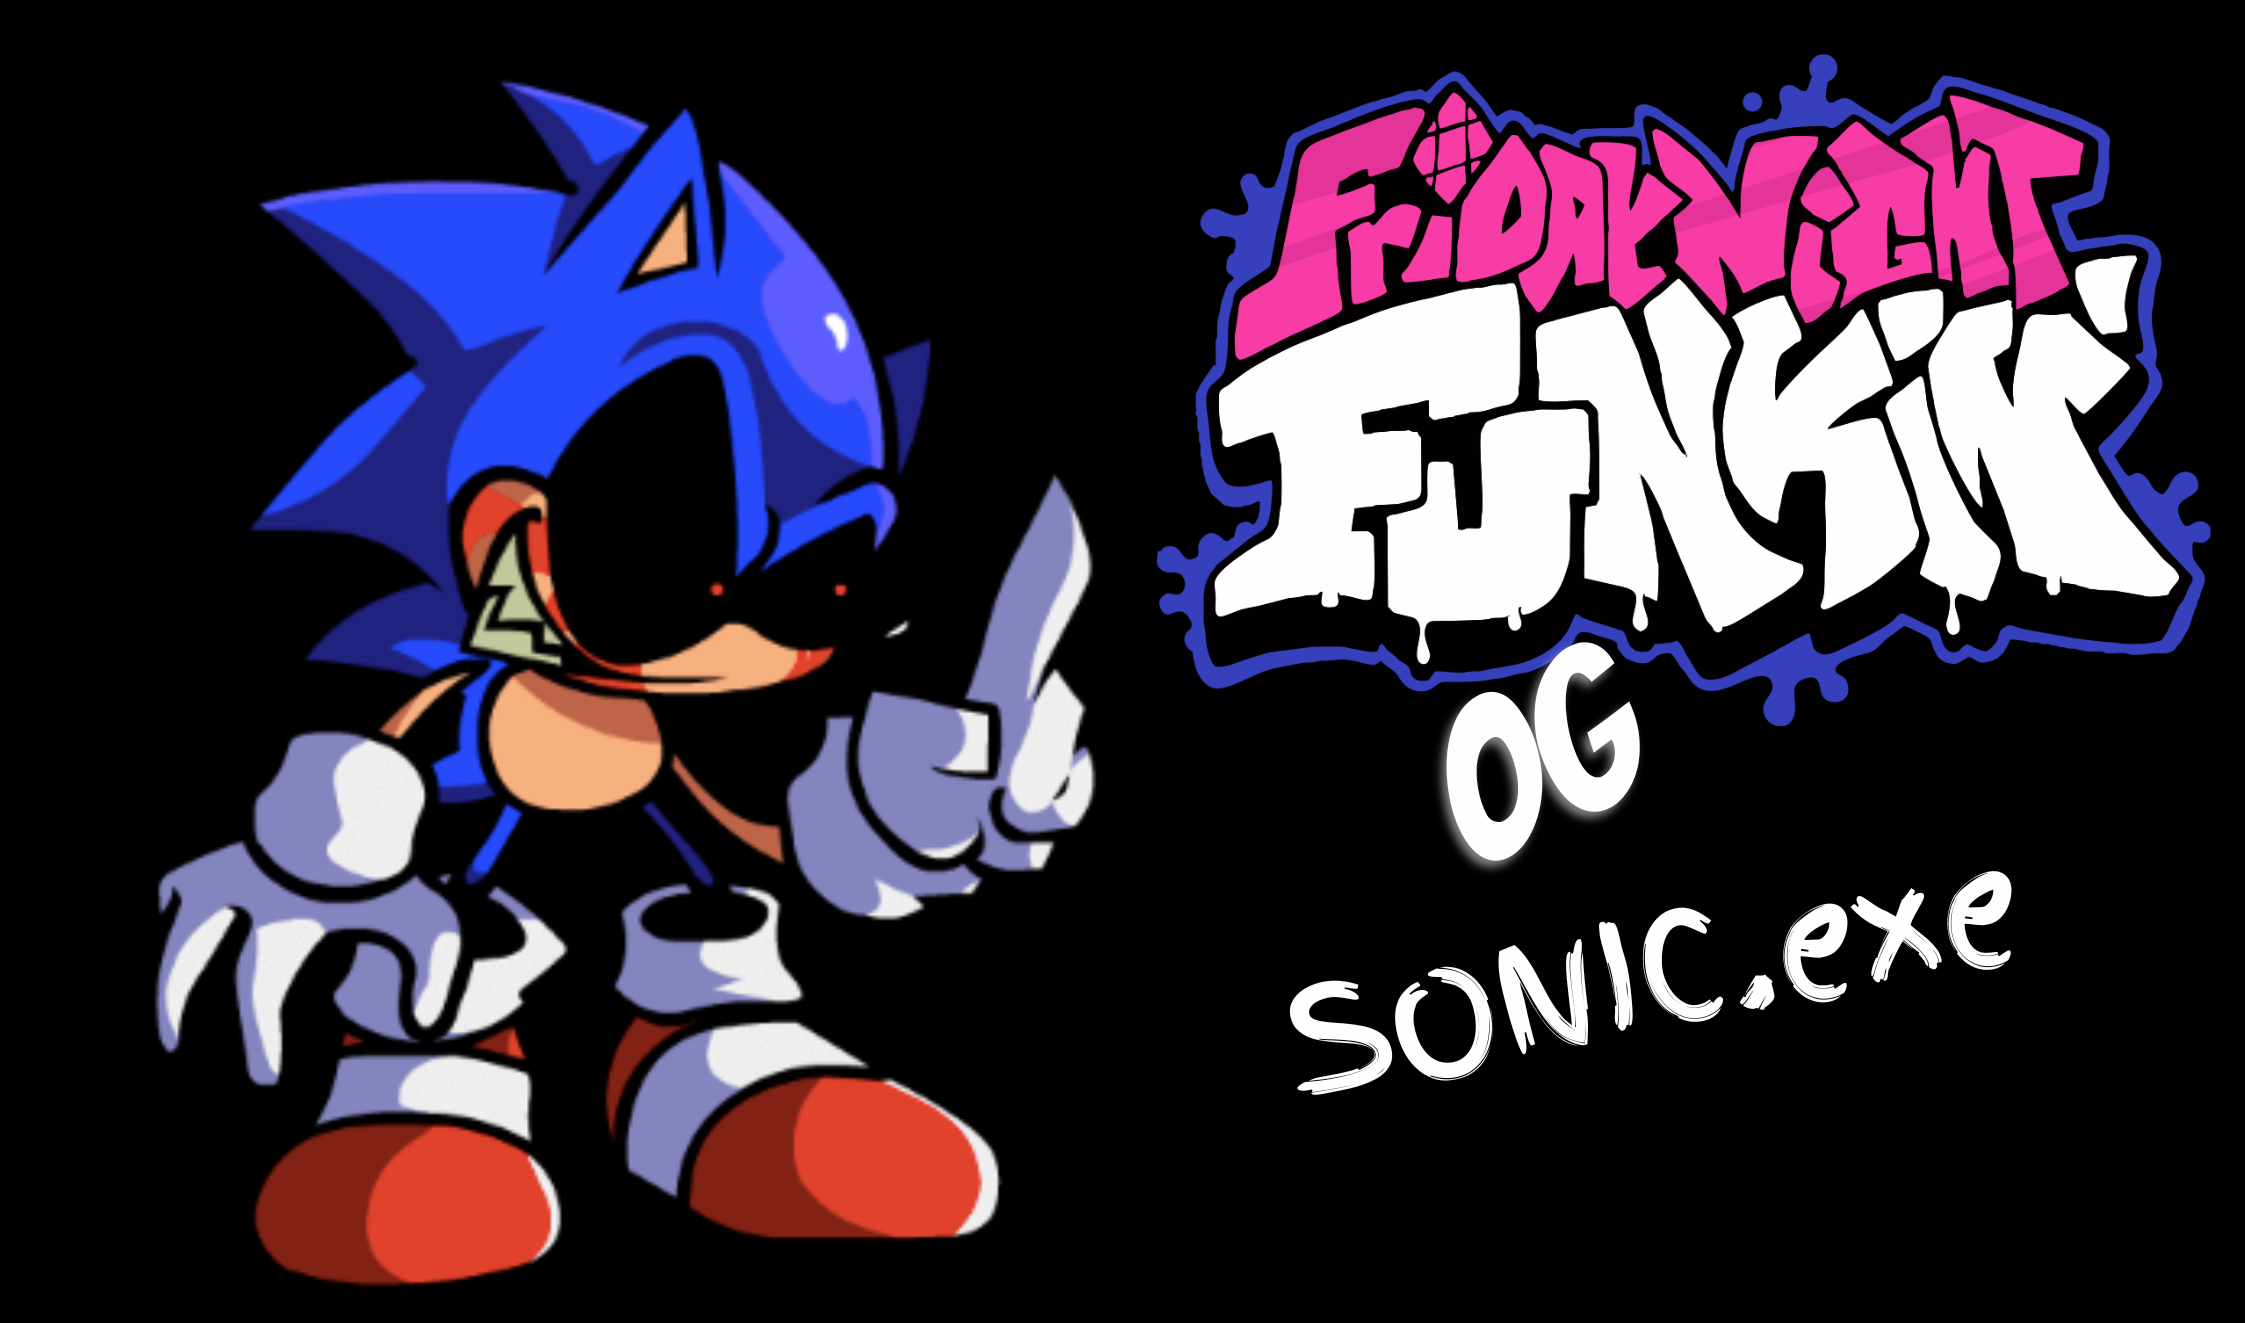 FNF vs Sonic.EYX Mod - Play Online Free - FNF GO